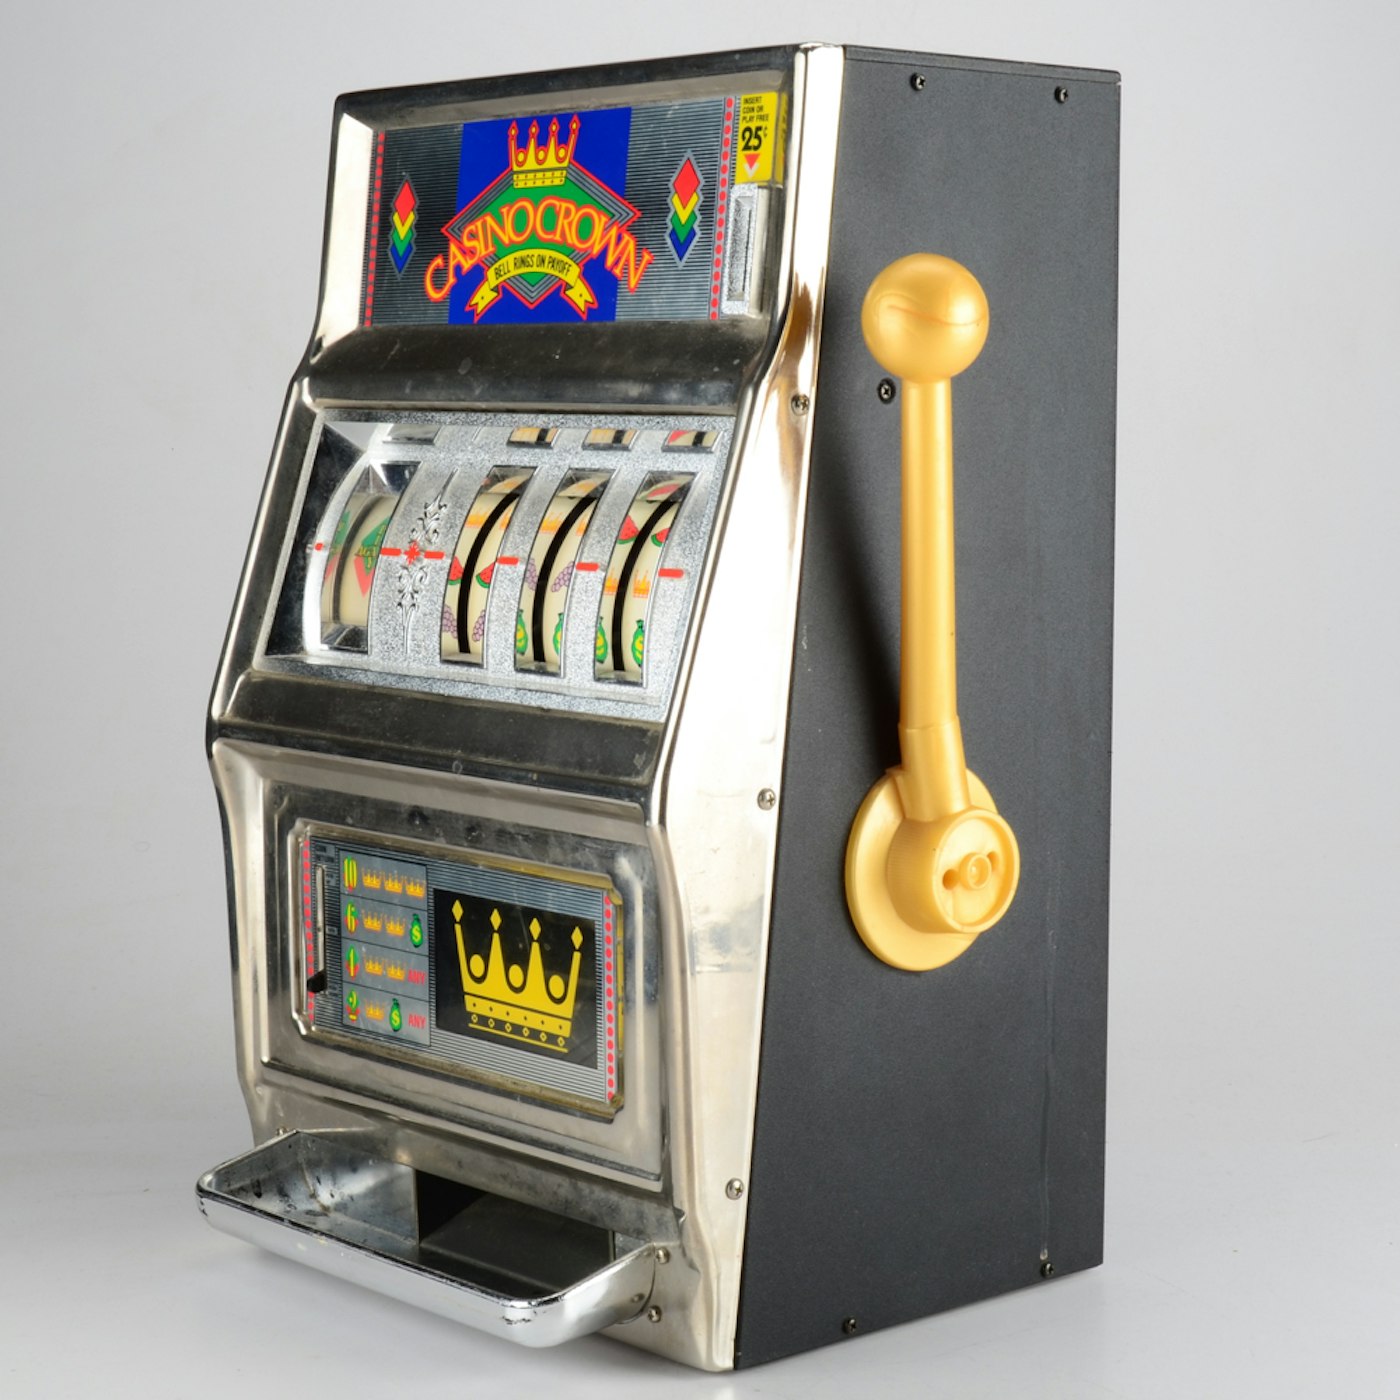 Crown casino pokie machines real money